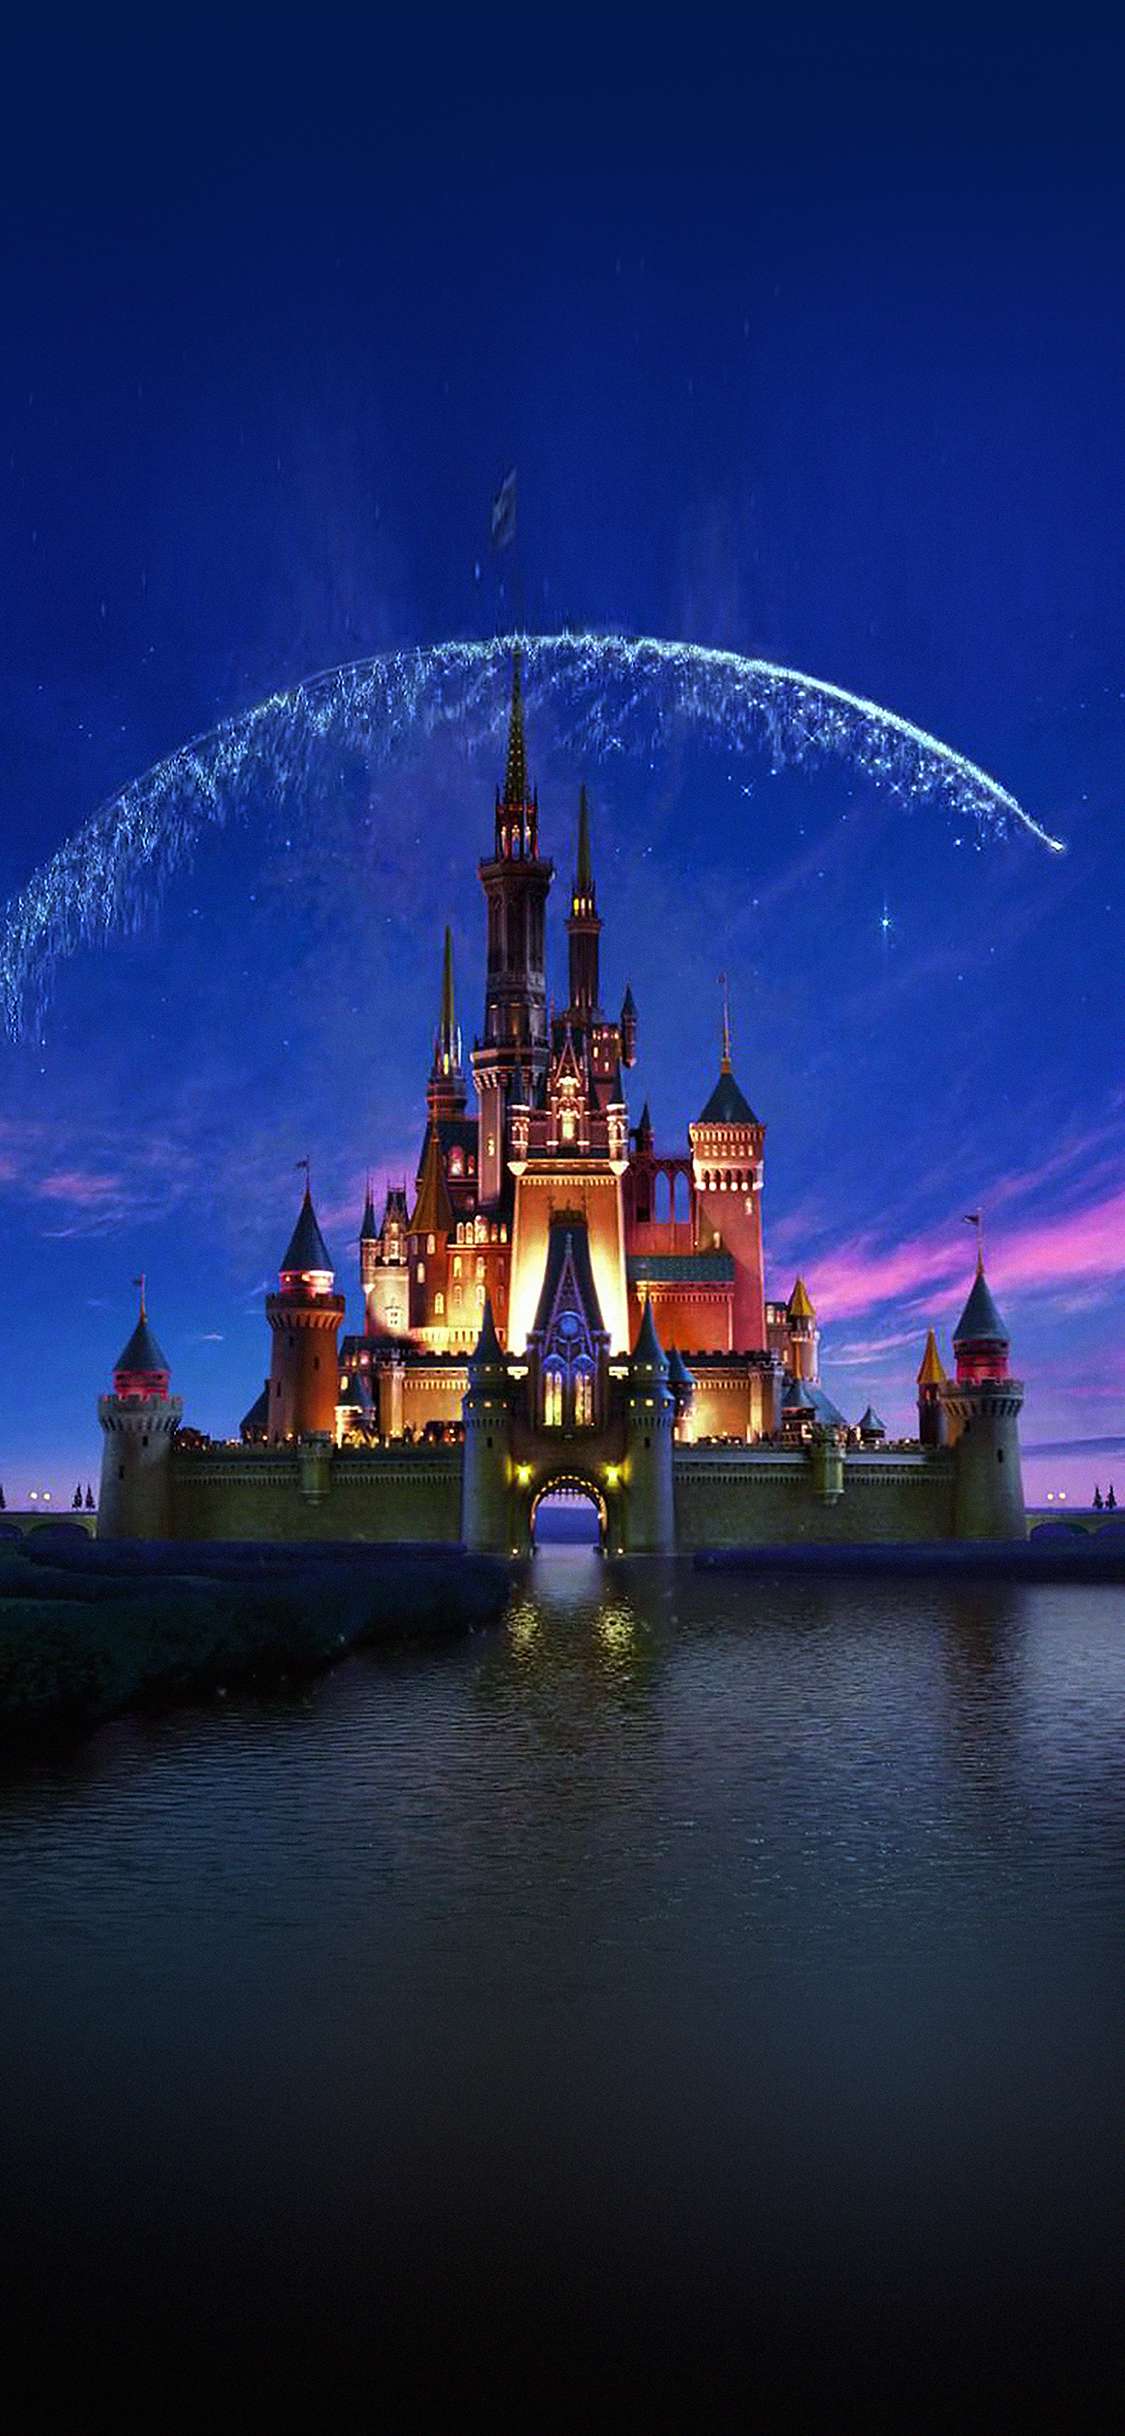 Disney Wallpaper iPhone X